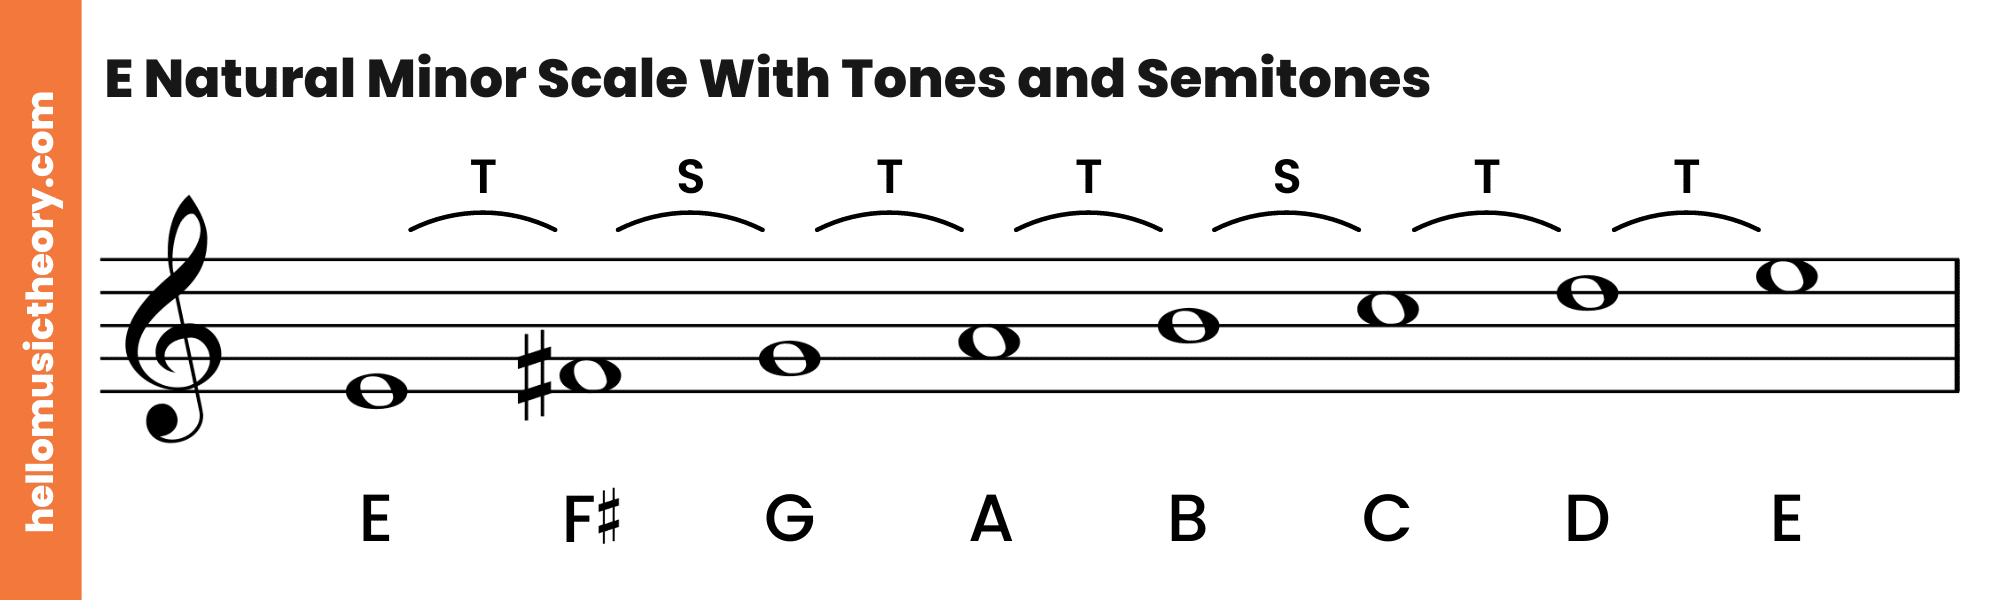 E Natural Minor Scale With Tones and Semitones